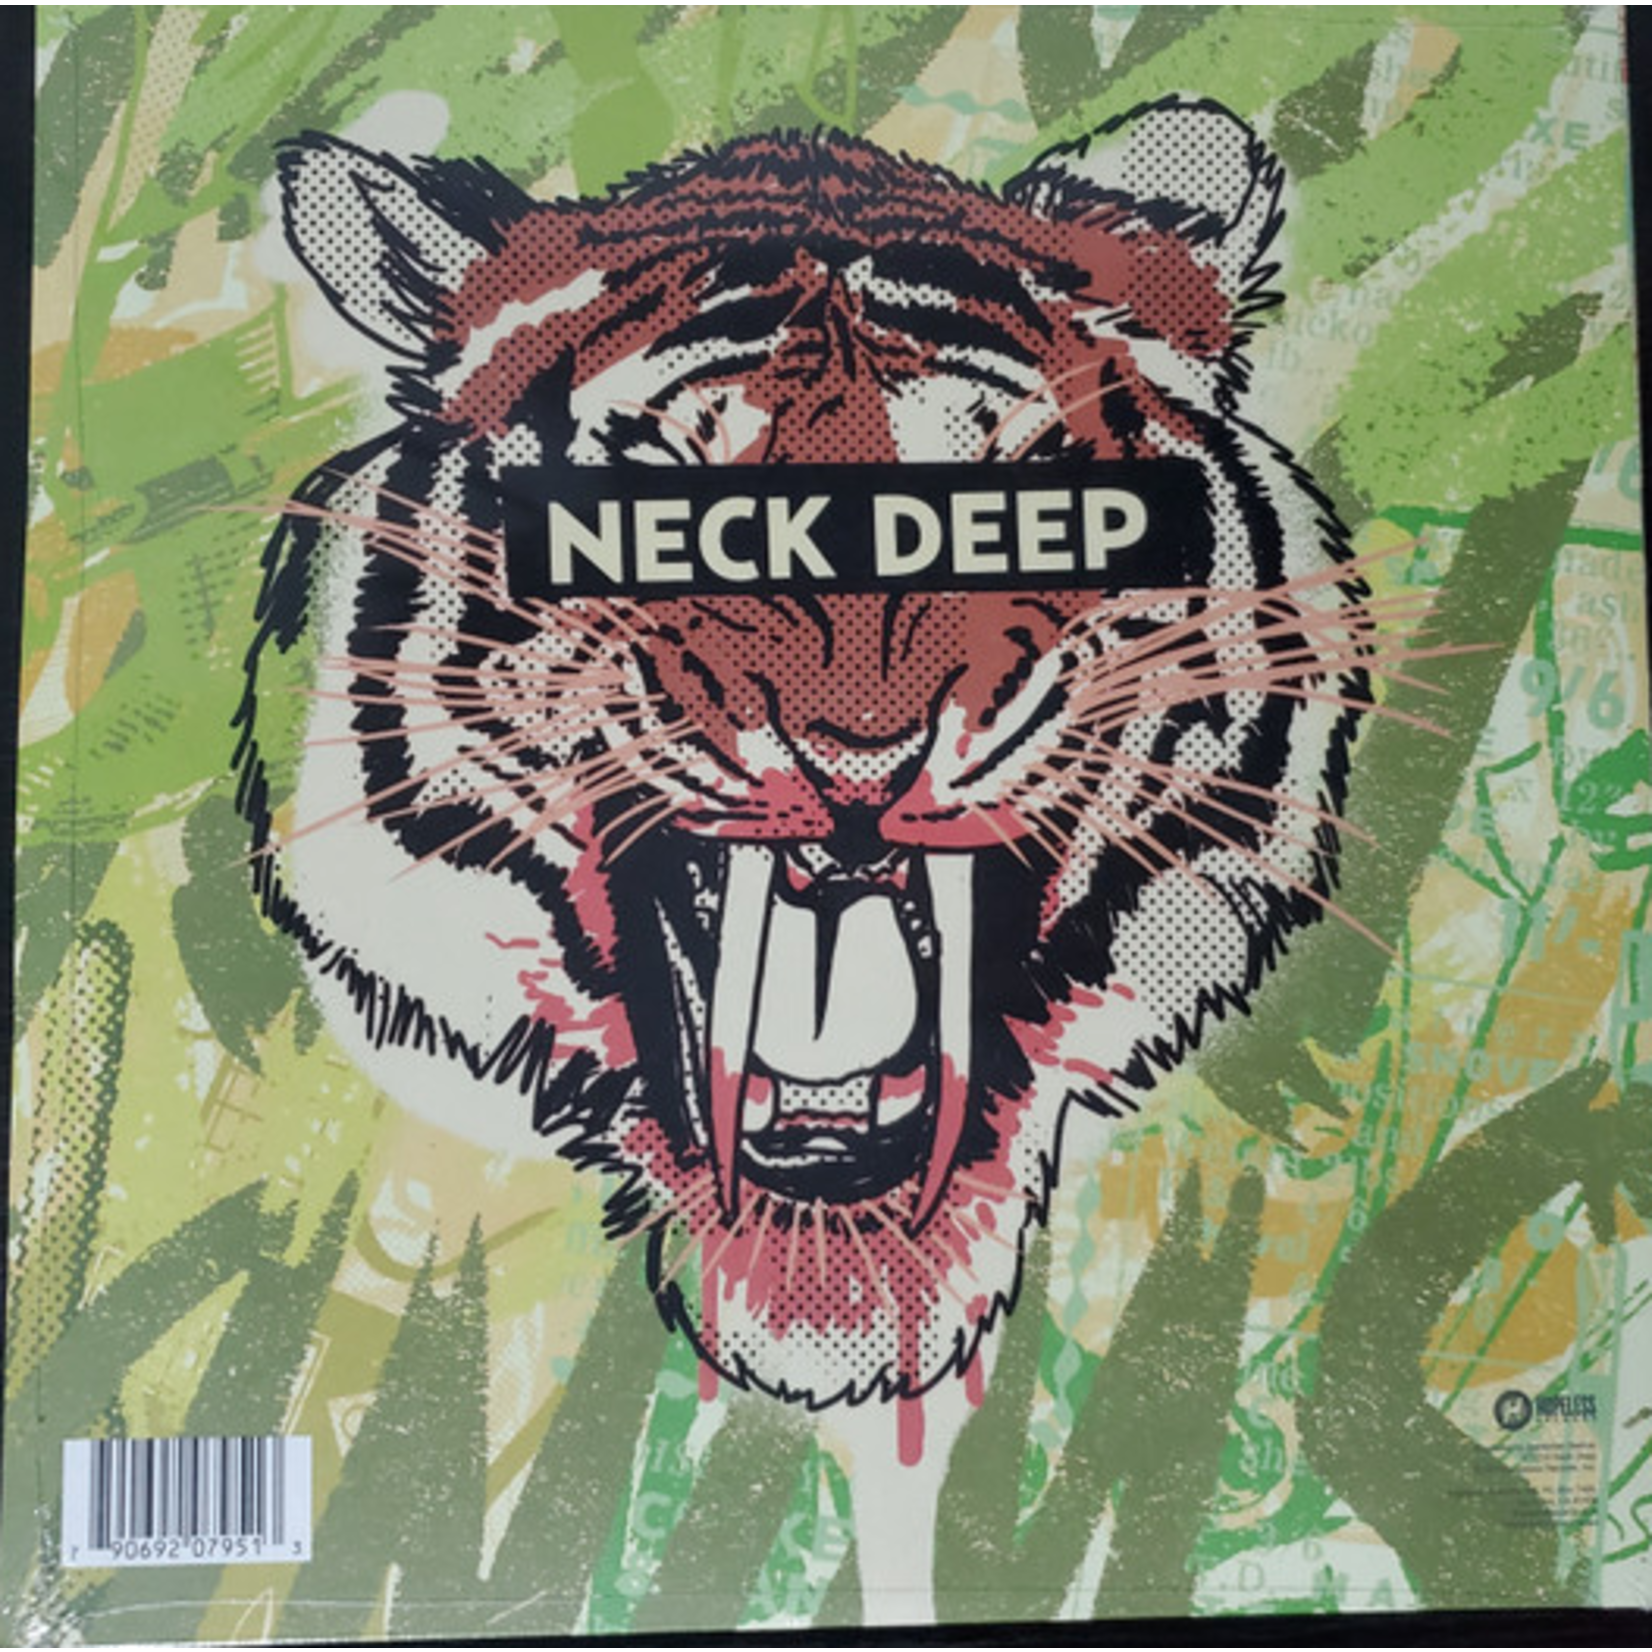 Hopeless Neck Deep - Rain In July (LP) [Orange]